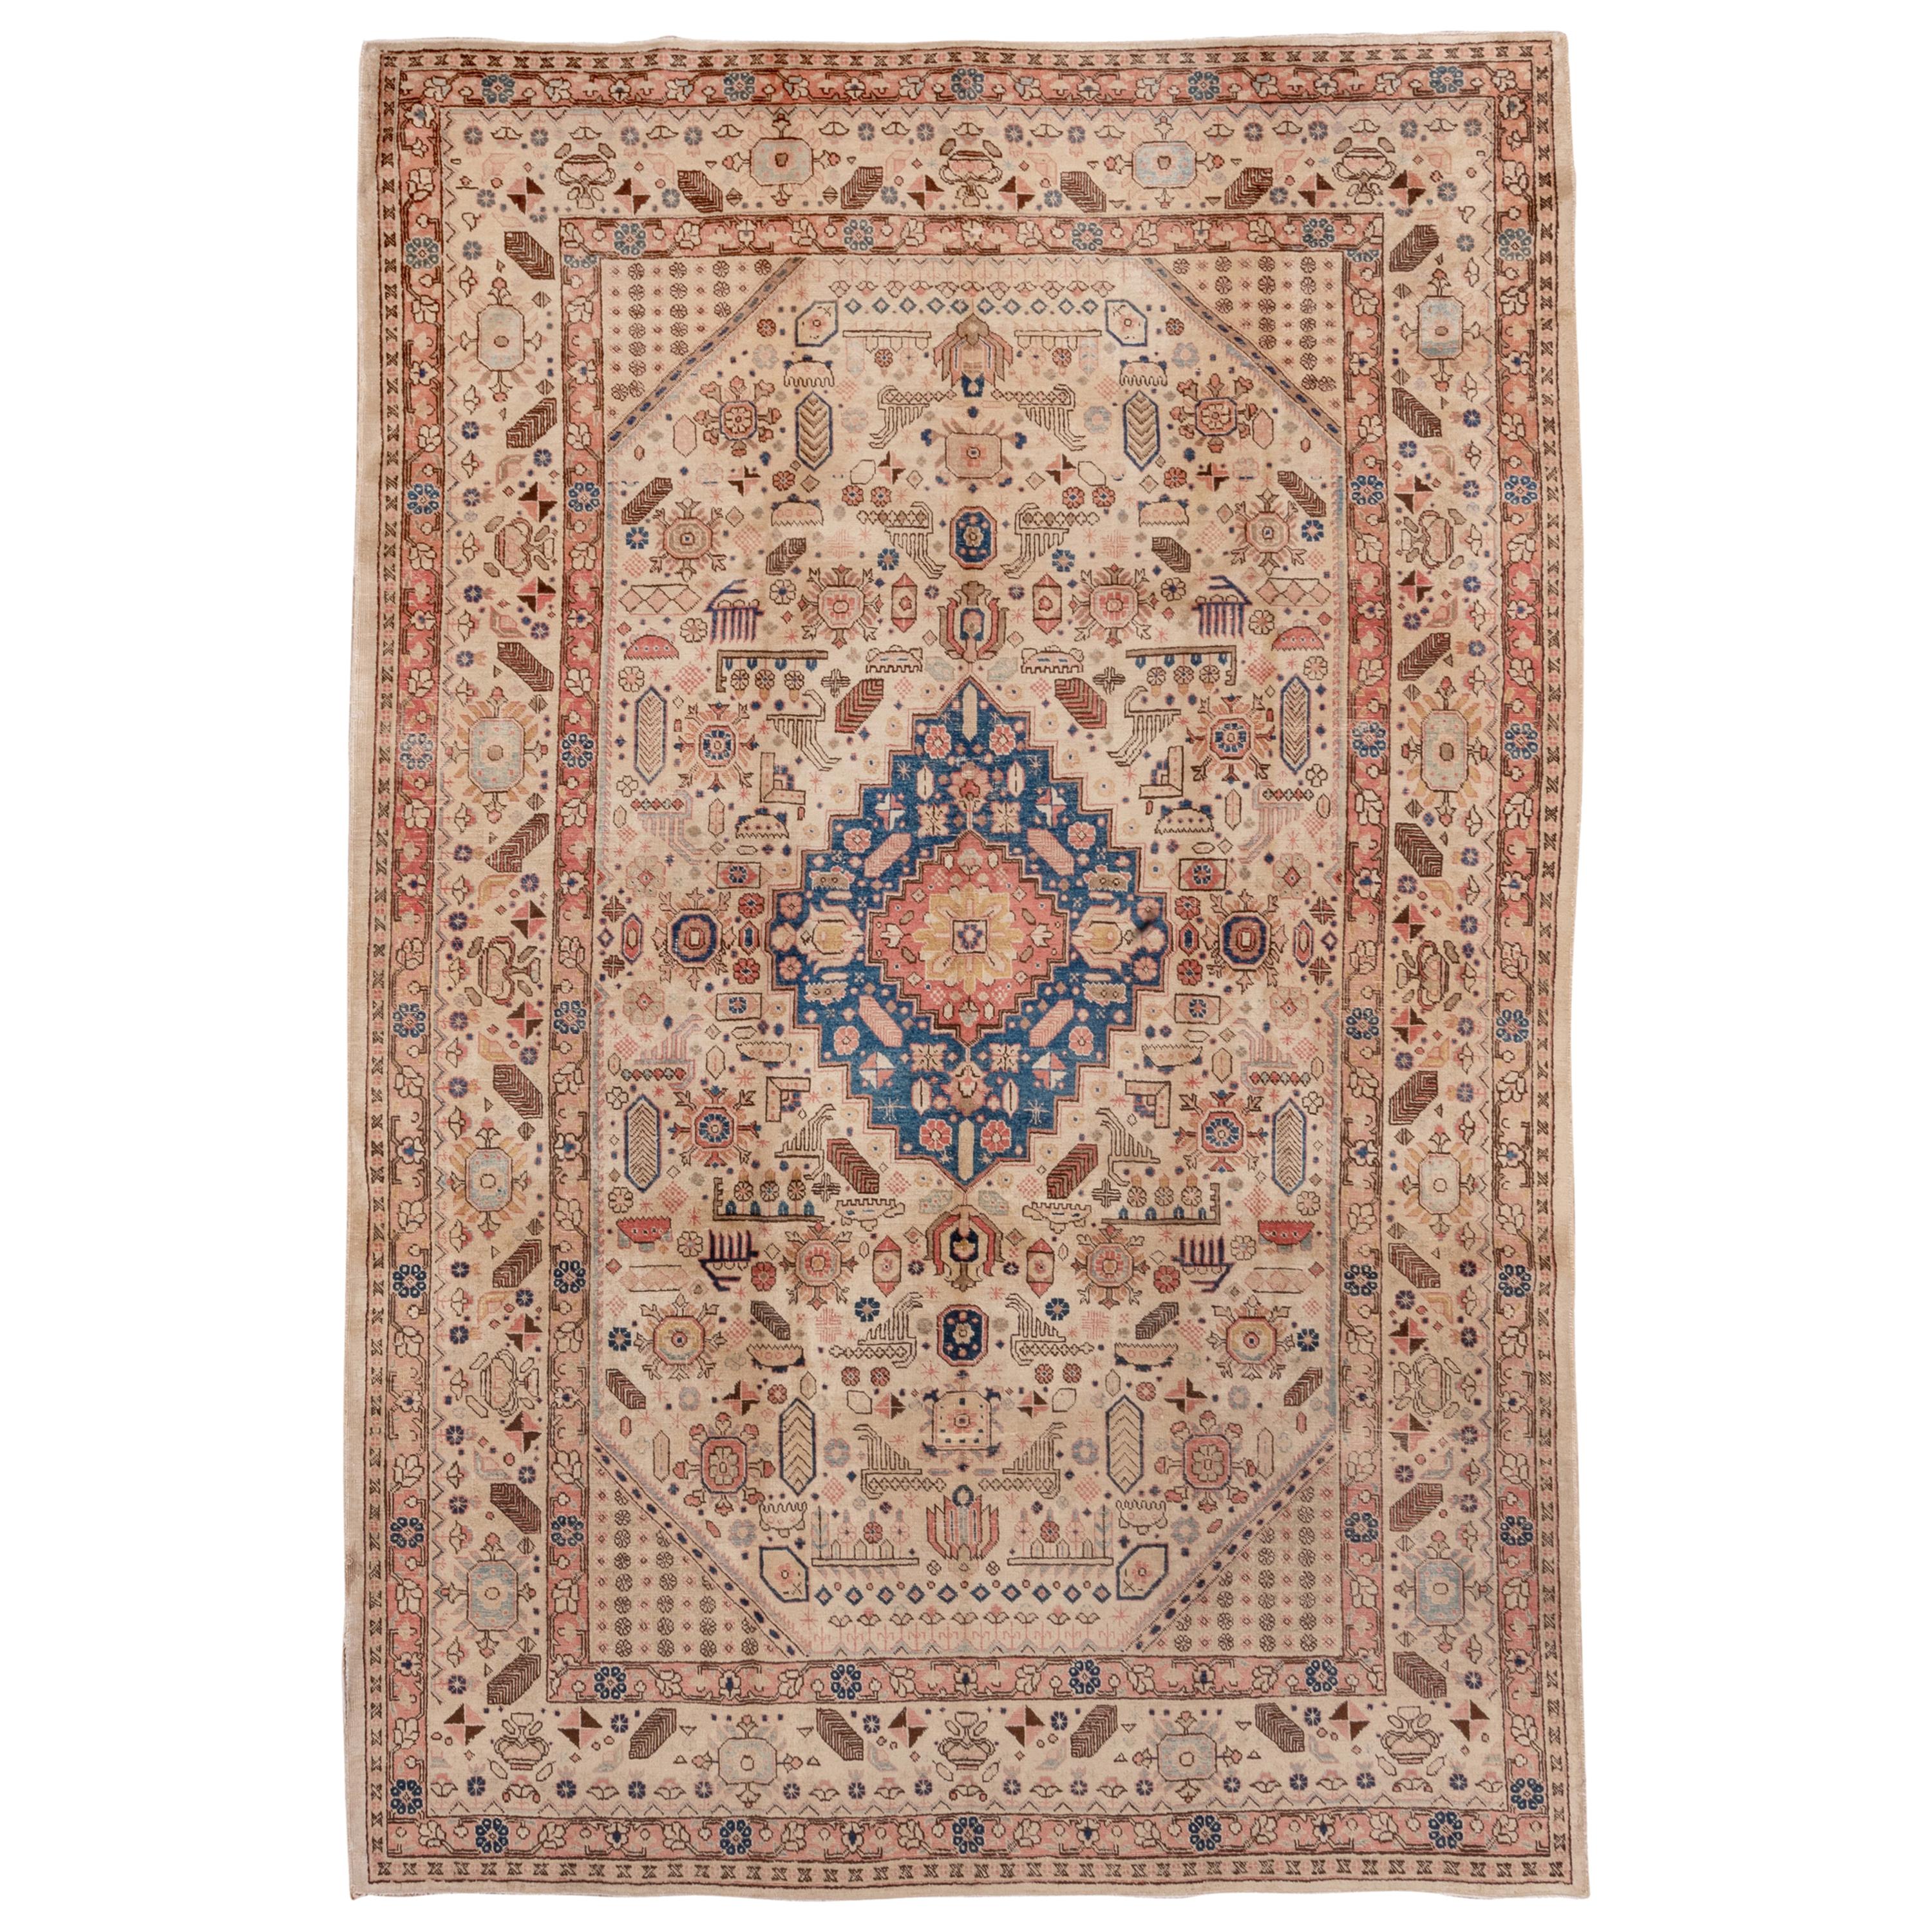 Unusual Antique Persian Tabriz Rug, Cream Field & Colorful Details